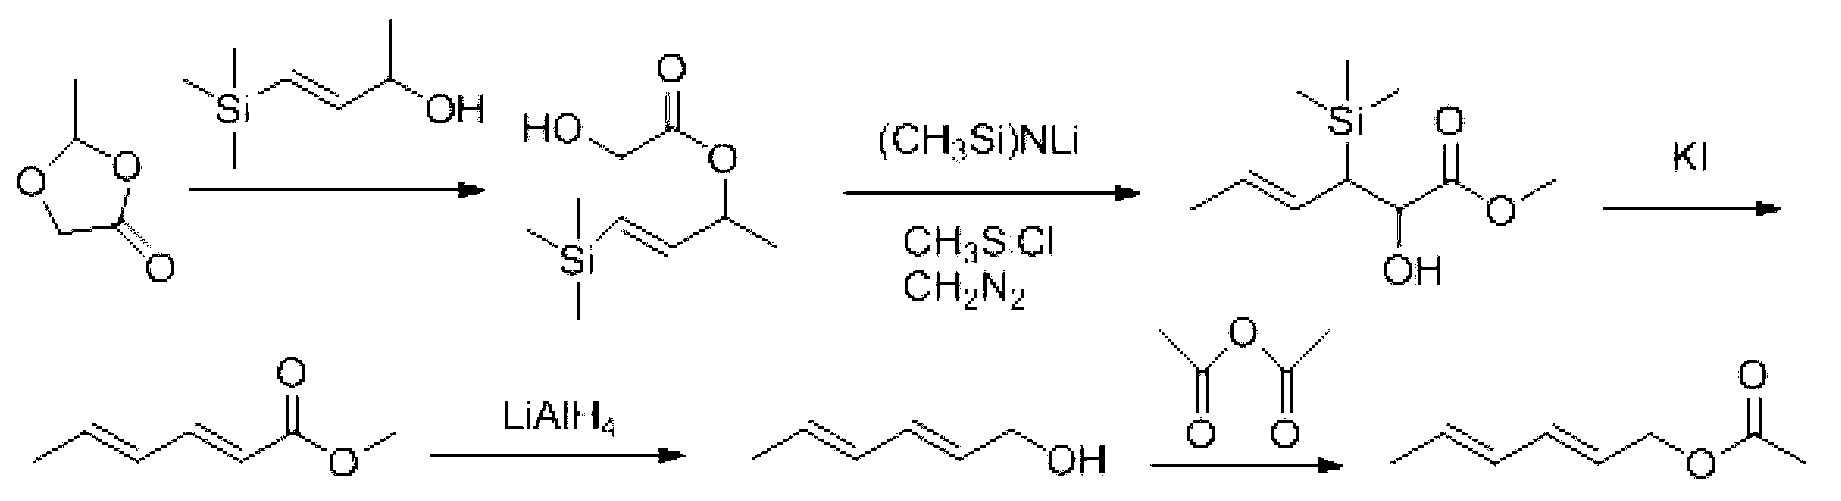 Preparation method for trans, trans-2,4-hexadiene acetate